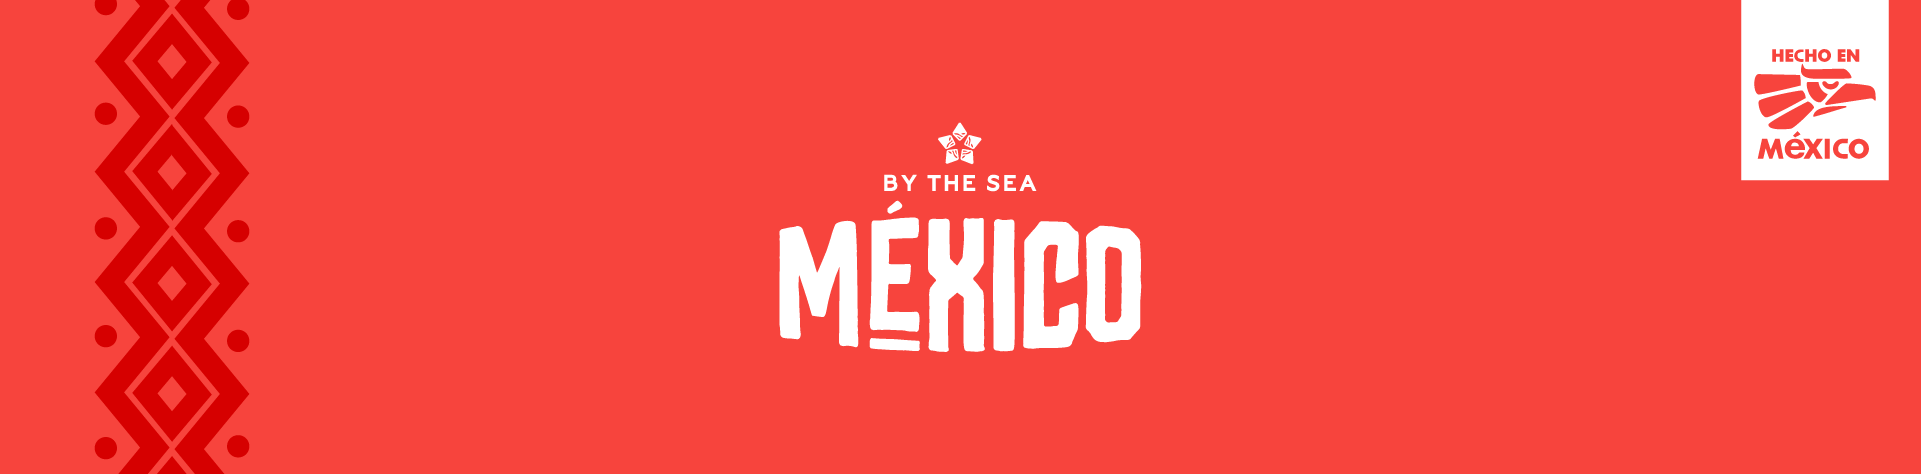 By The Sea México